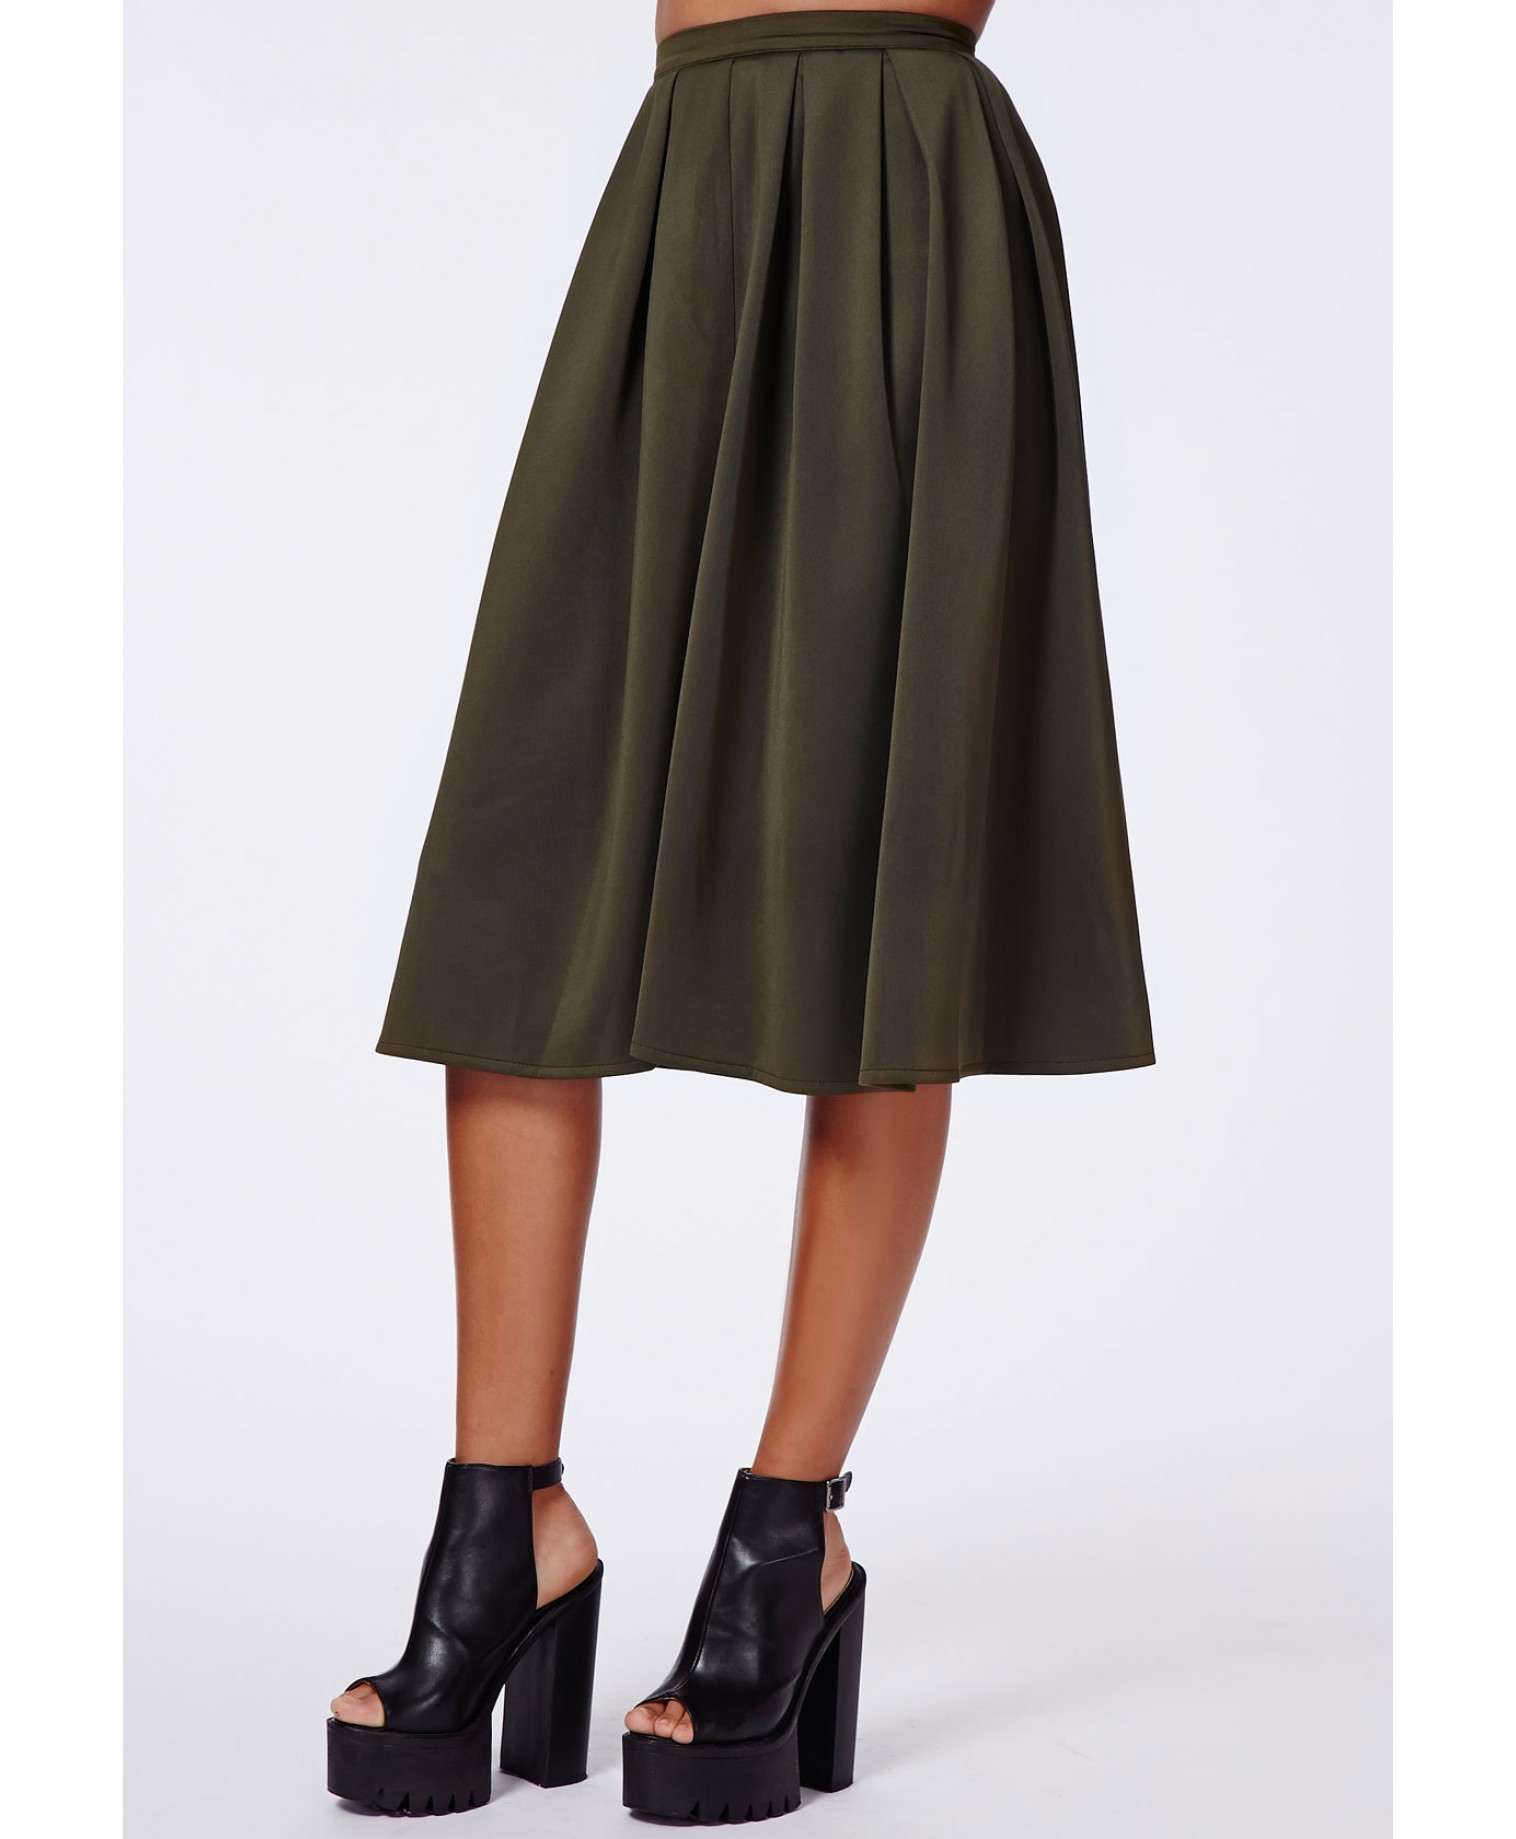 Missguided Auberta Pleated Midi Skirt Khaki in Khaki | Lyst